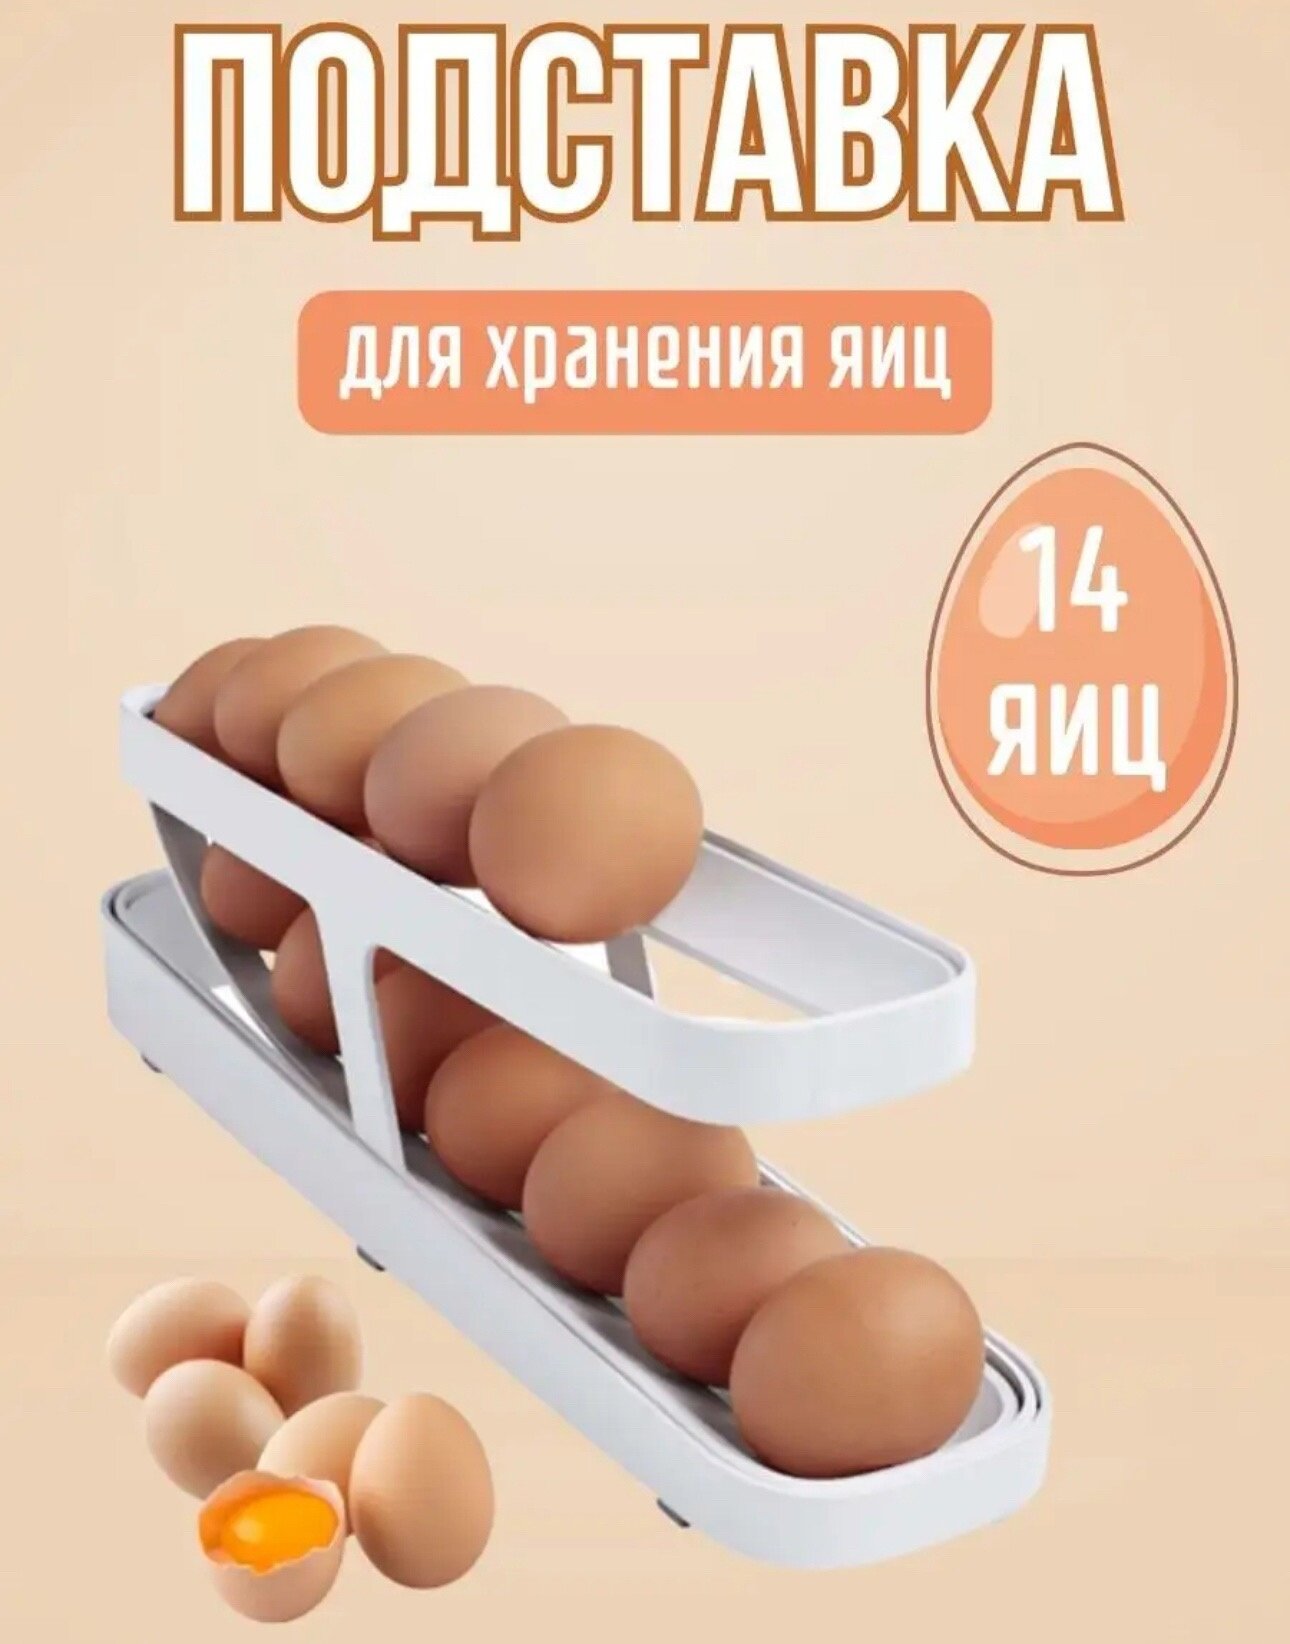 Подставка для хранения яиц для холодильника, контейнер для яиц, органайзер для яиц, ячейки для яиц, белая